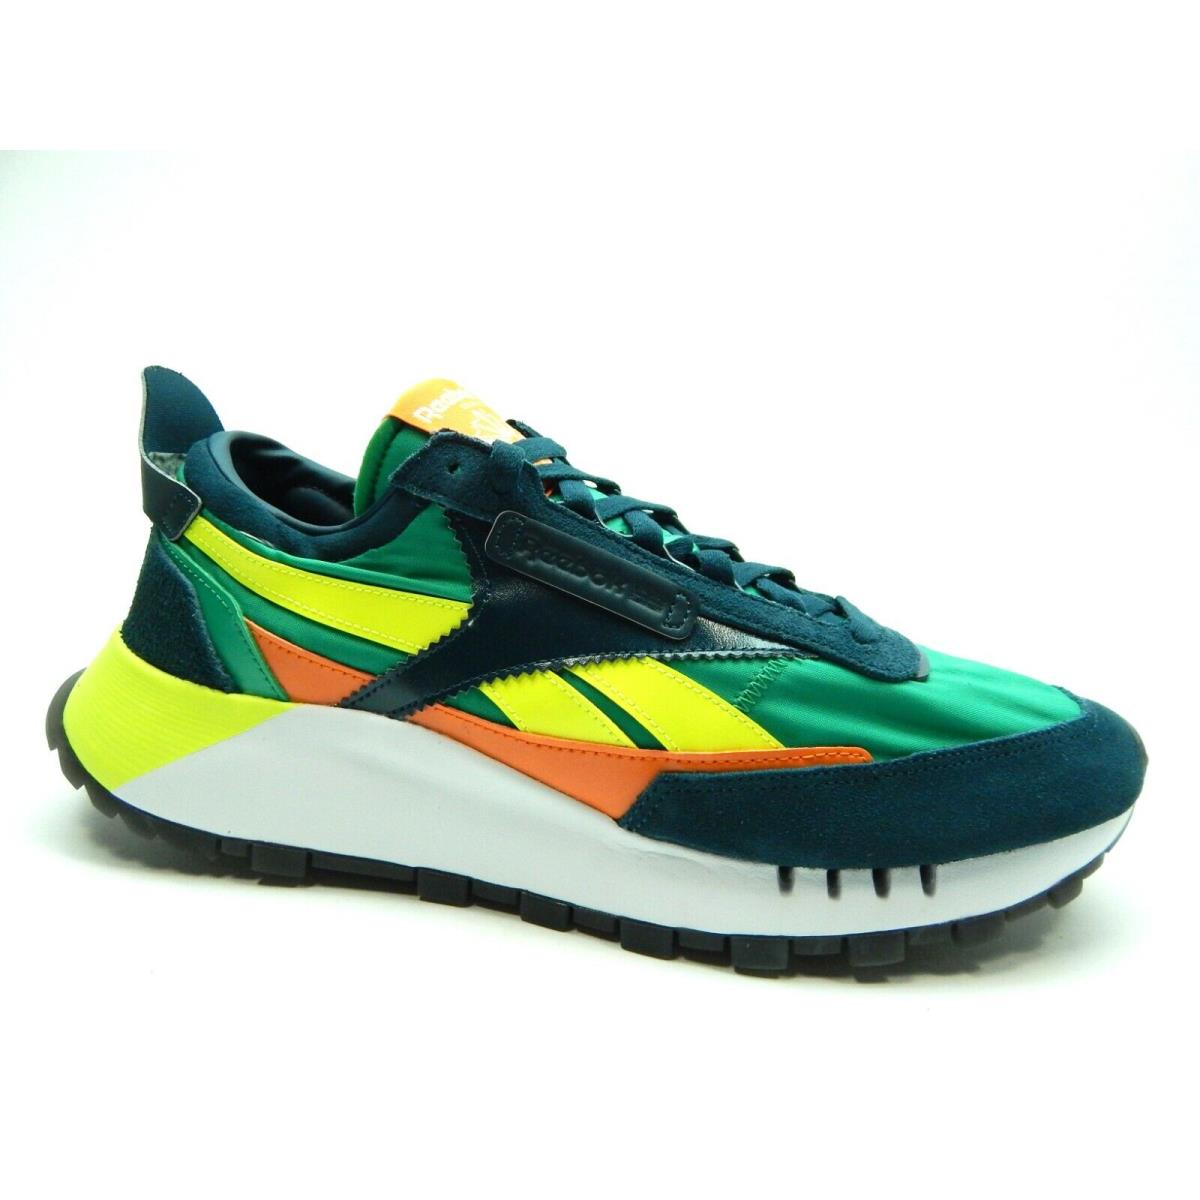 Reebok CL Legacy FY7335 Multicolor Running Men Shoes Size 13